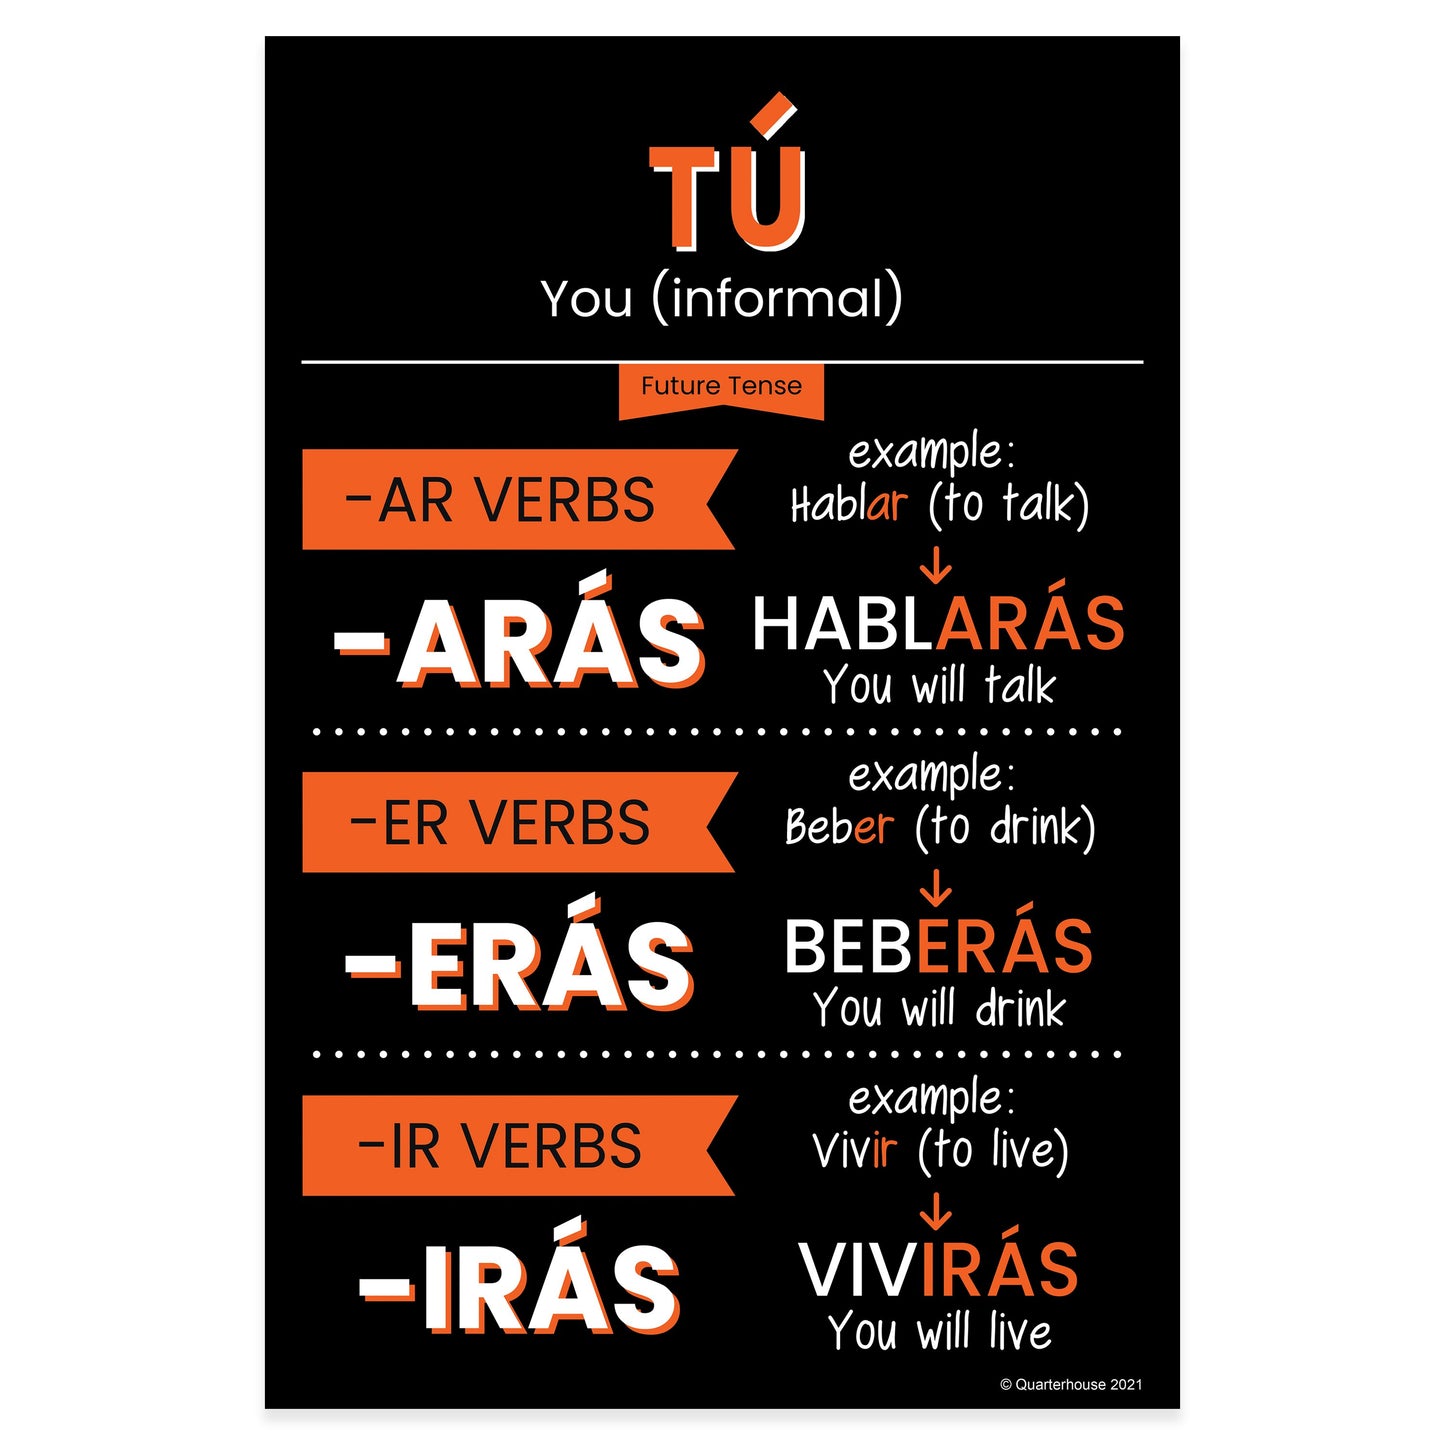 Quarterhouse Tú - Future Tense Spanish Verb Conjugation (Dark-Themed) Poster, Spanish and ESL Classroom Materials for Teachers